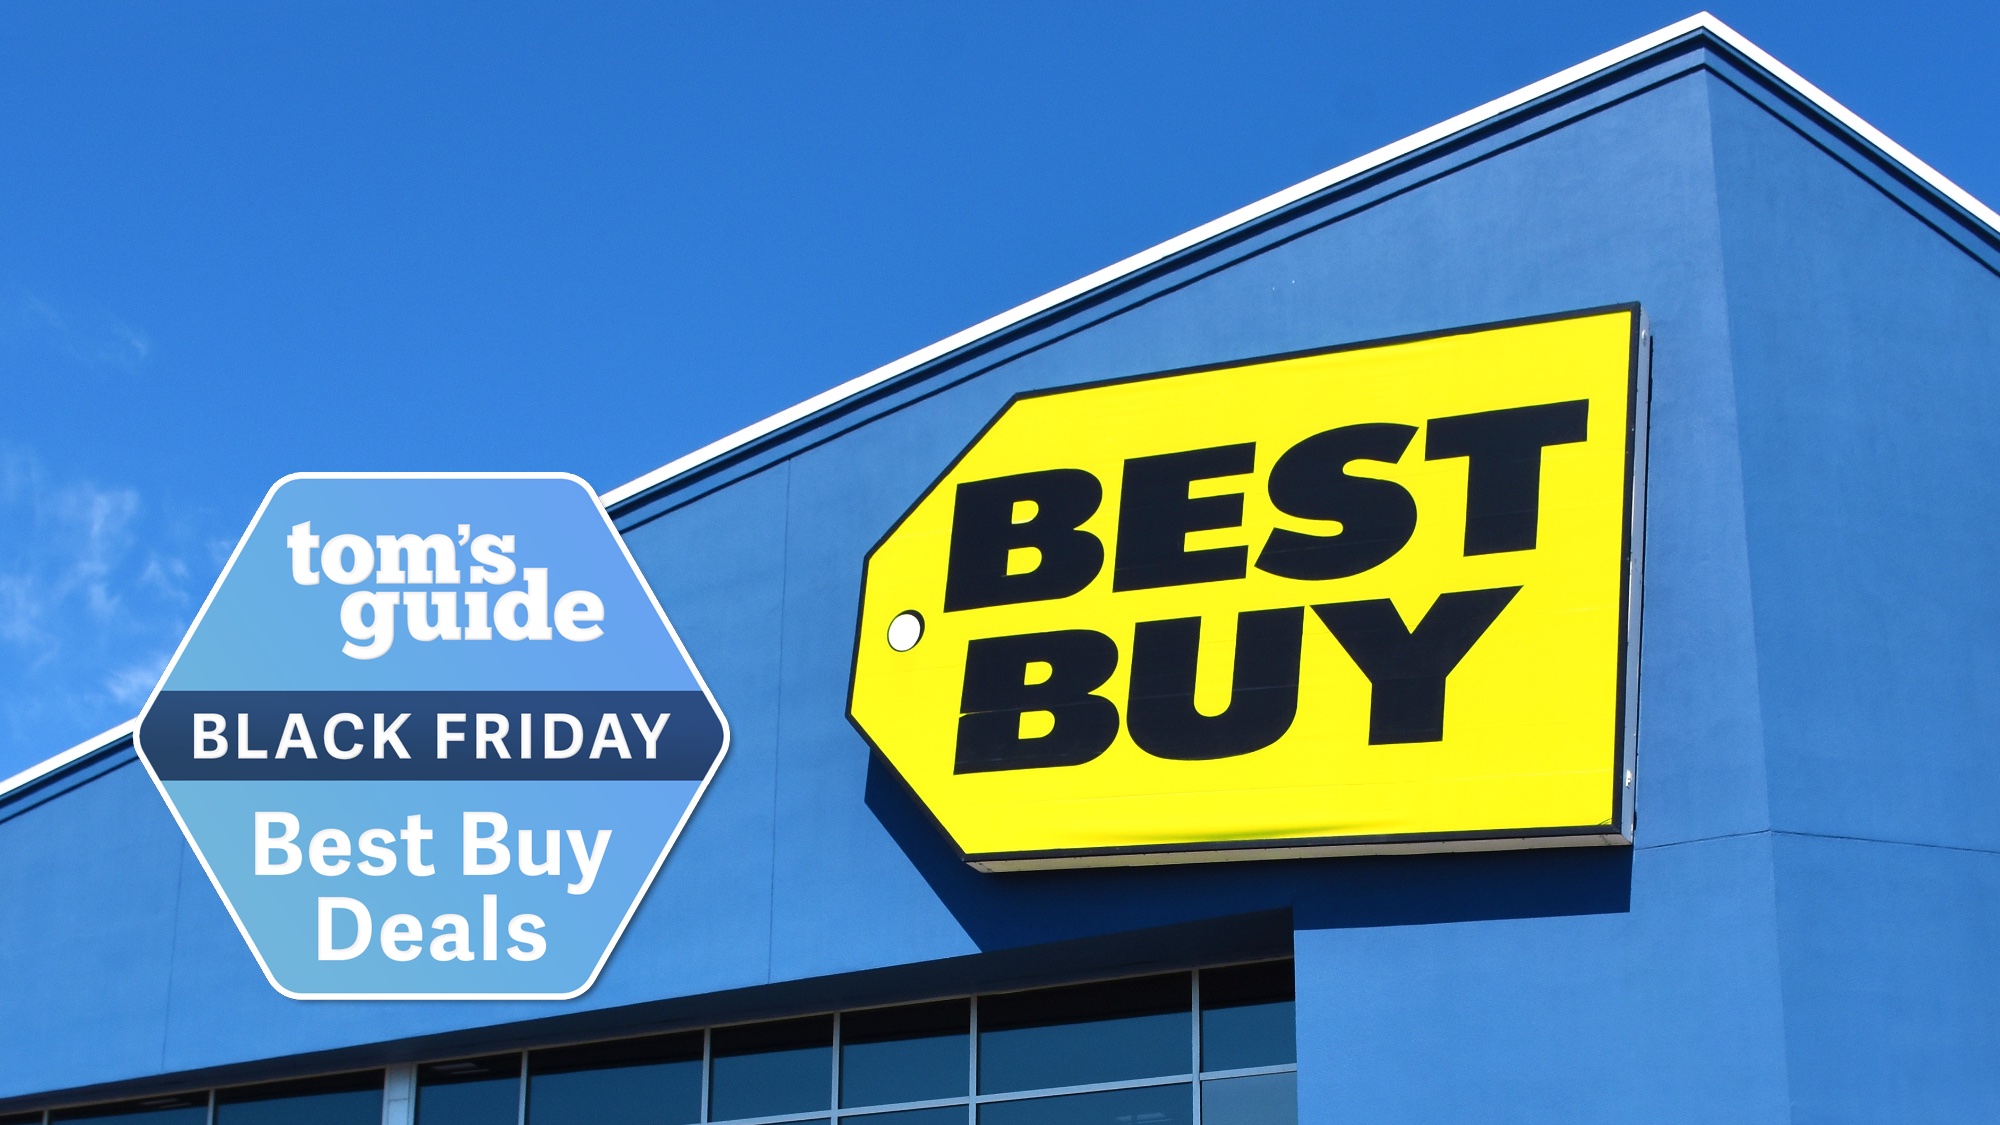 Best Buy's Black Friday Sale begins Nov. 17 - Best Buy Corporate News and  Information